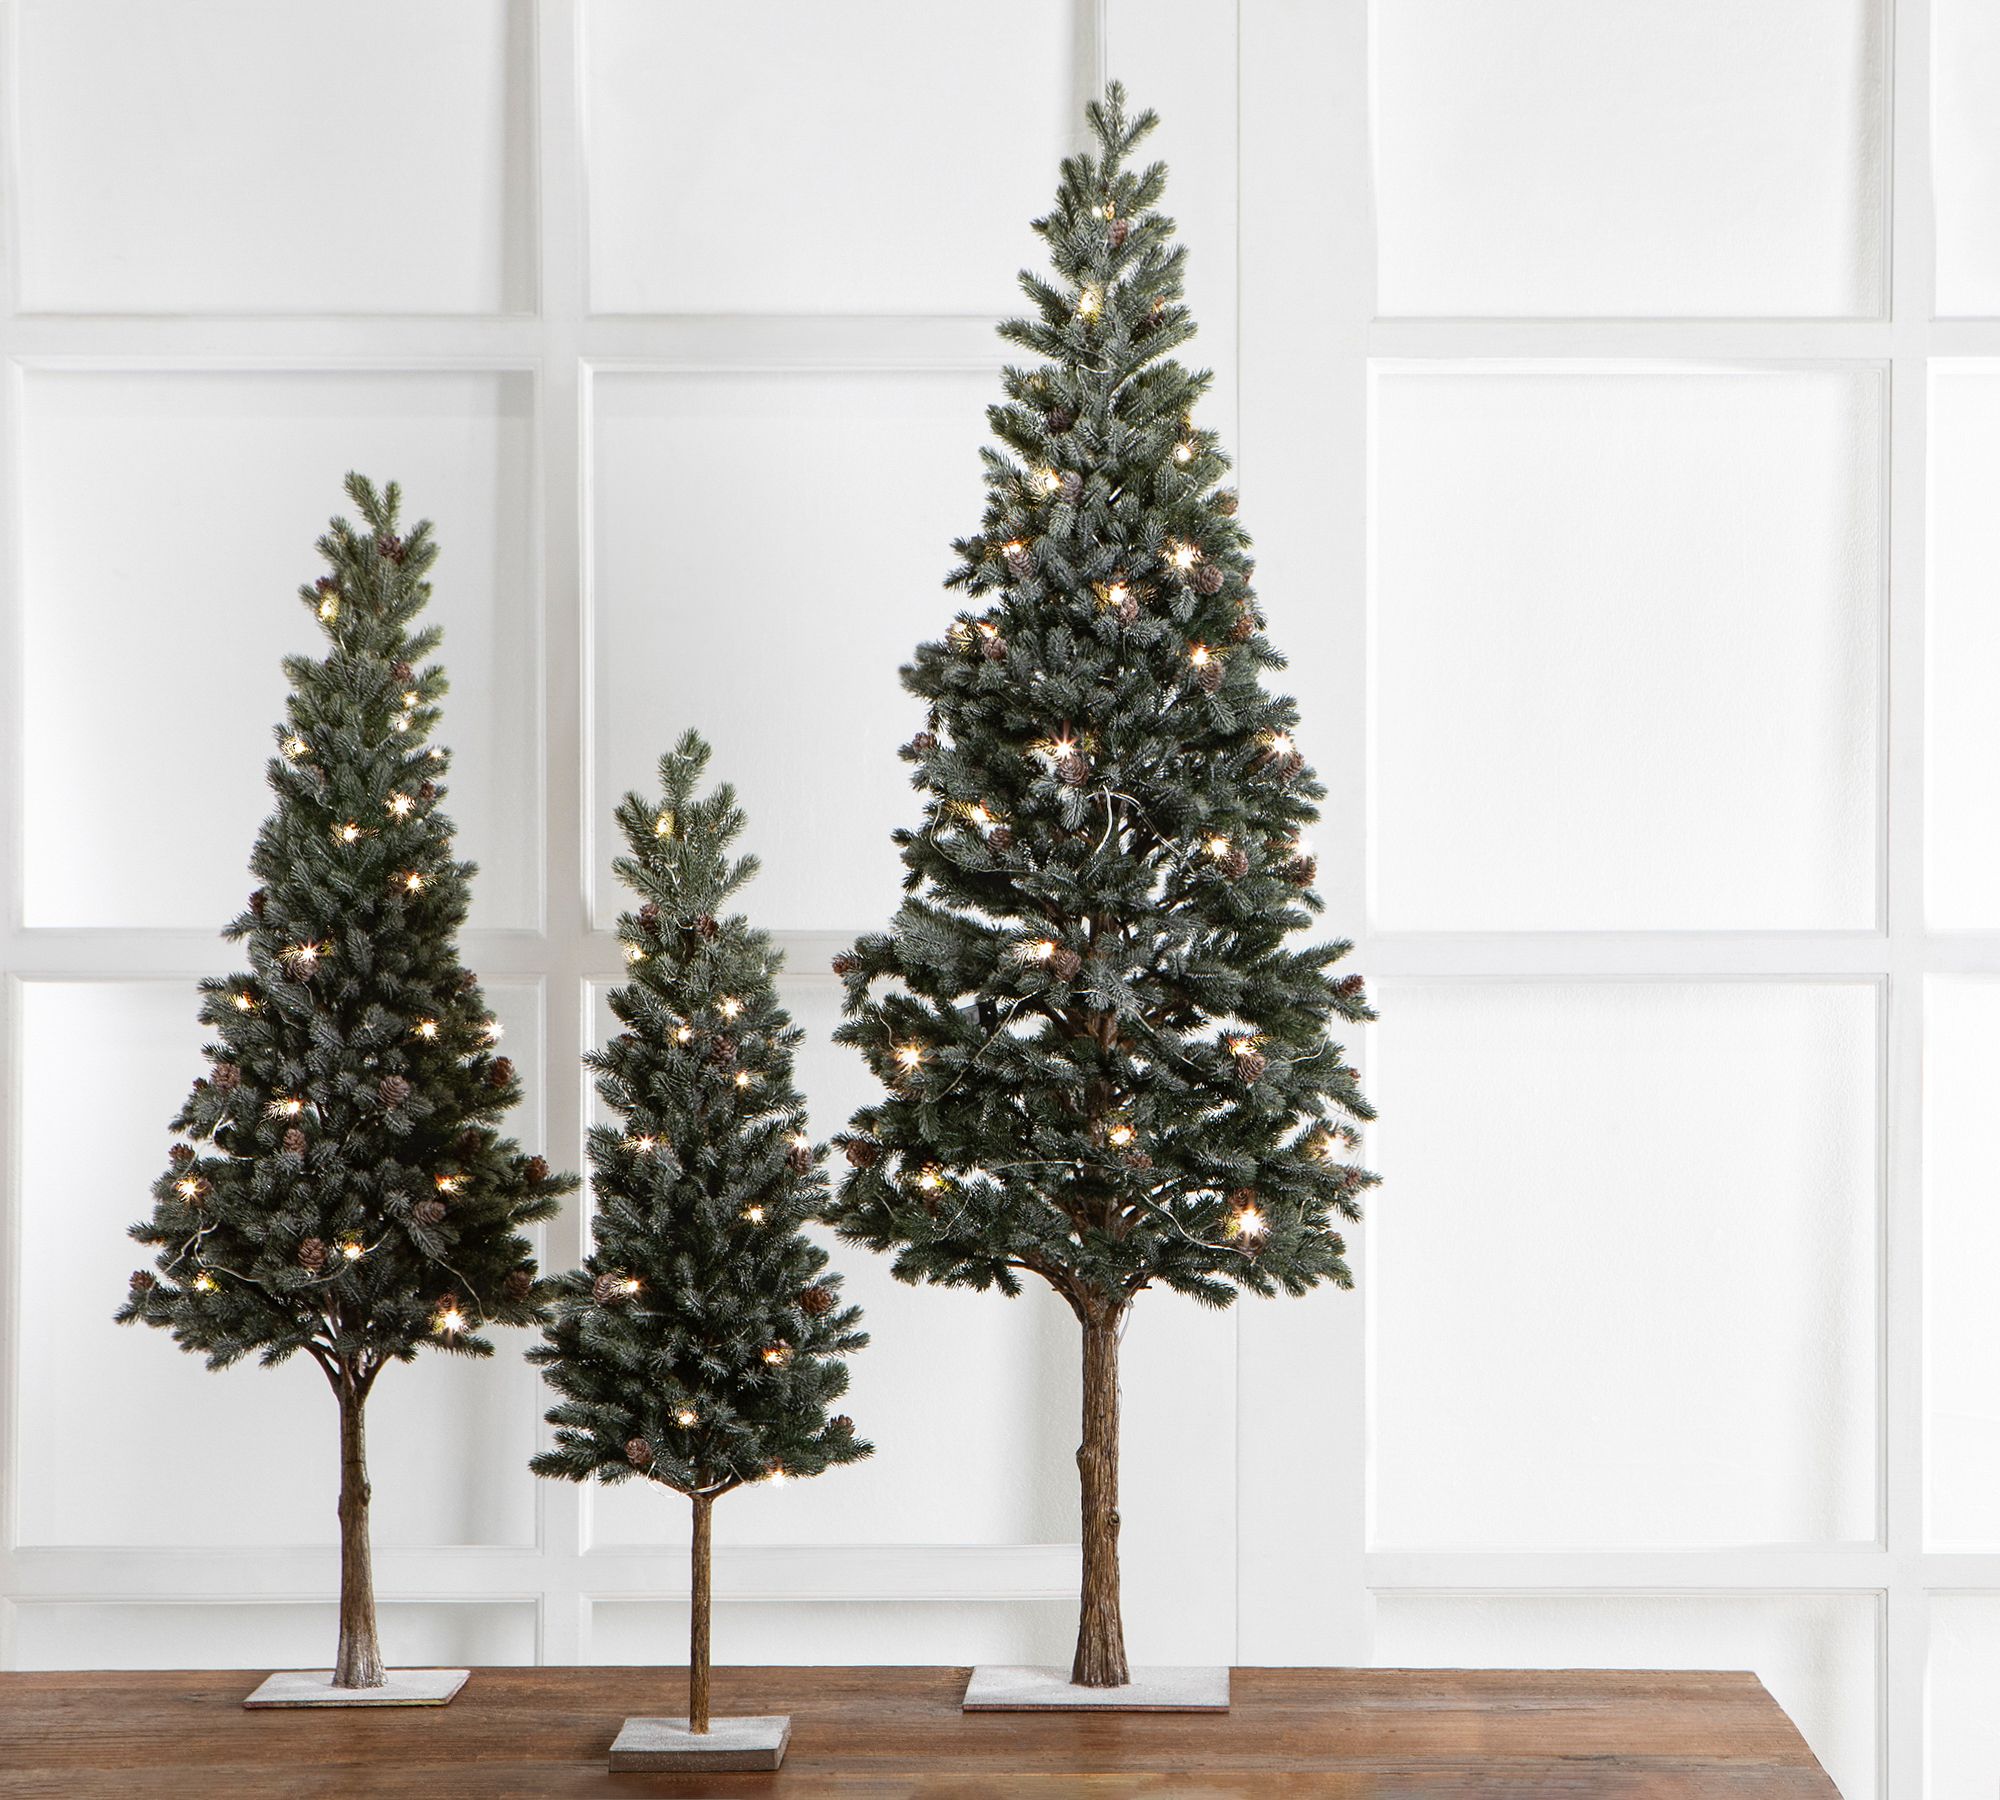 Lit Snowy Pine Artificial Christmas Tree